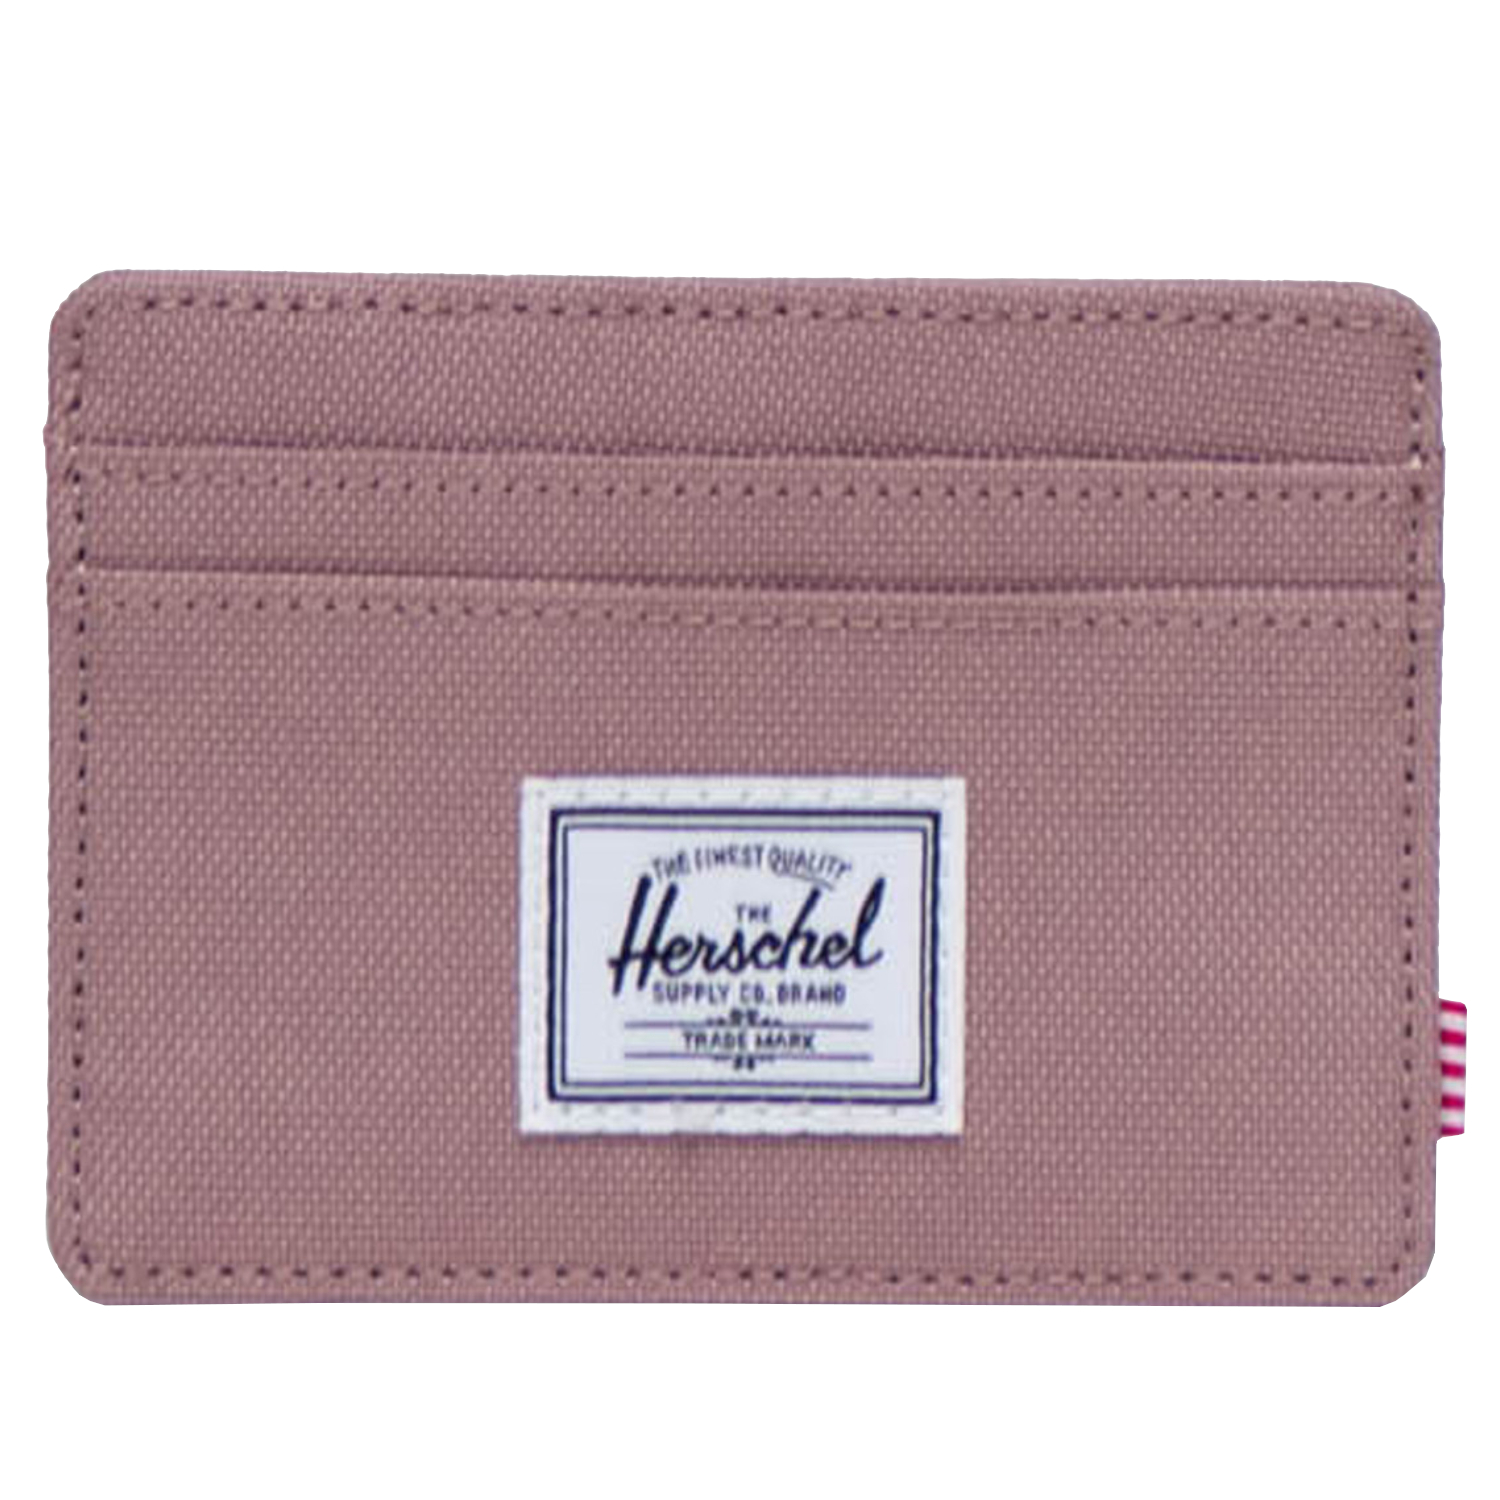 цена Кошелек Herschel Herschel Cardholder Wallet, розовый